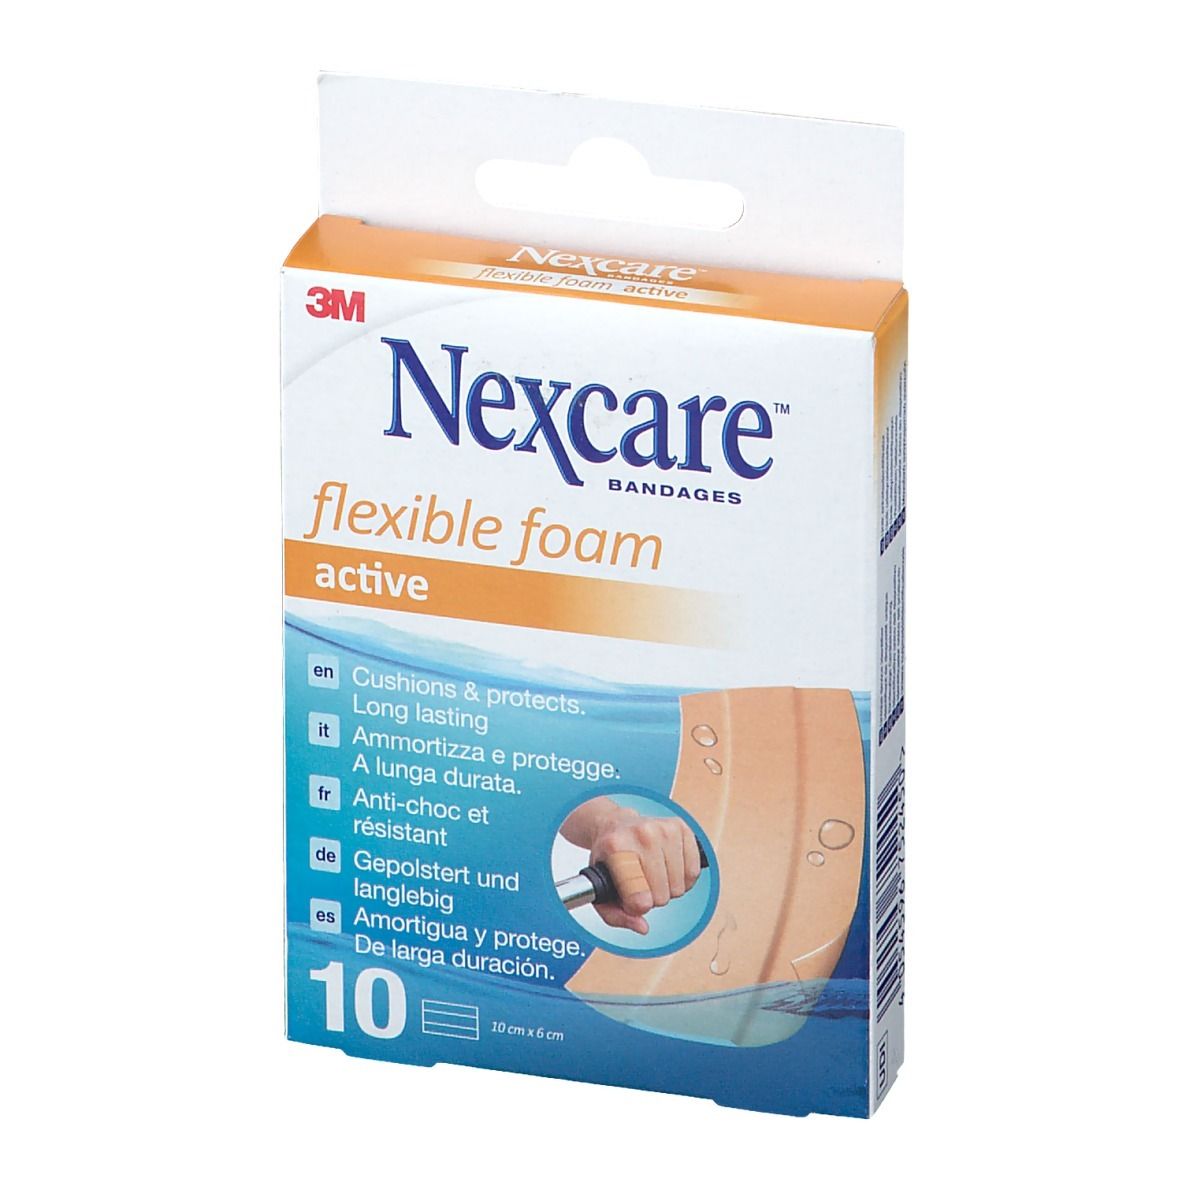 Nexcare Flexible Foam Active